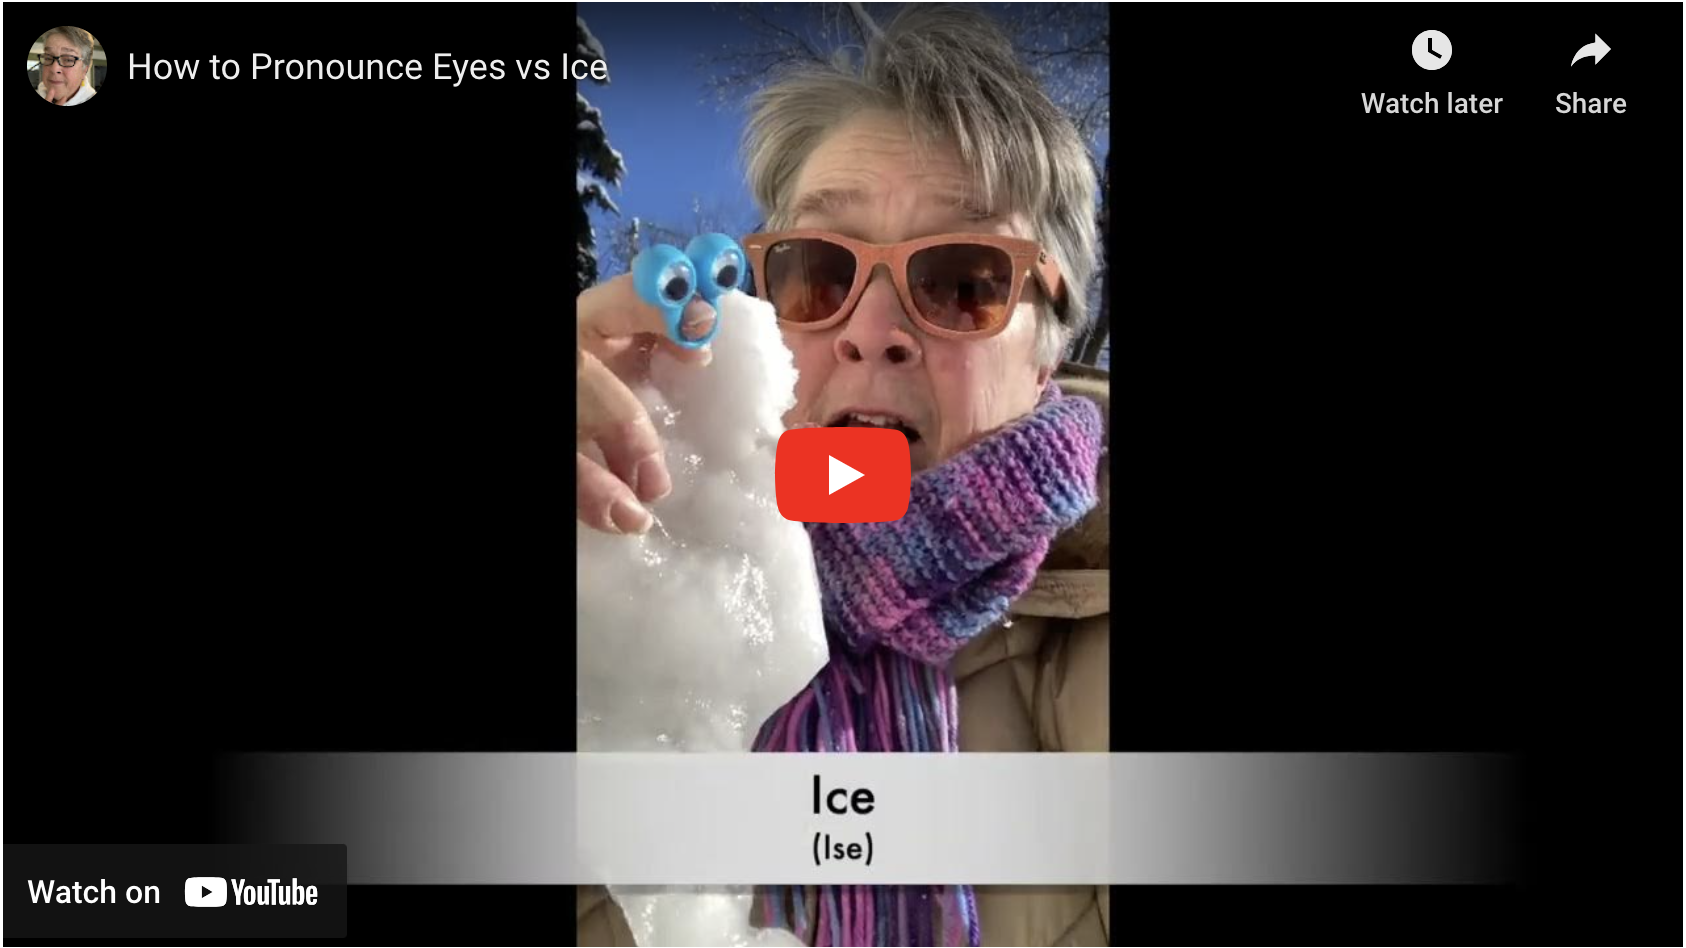 How to pronounce eyes vs ice